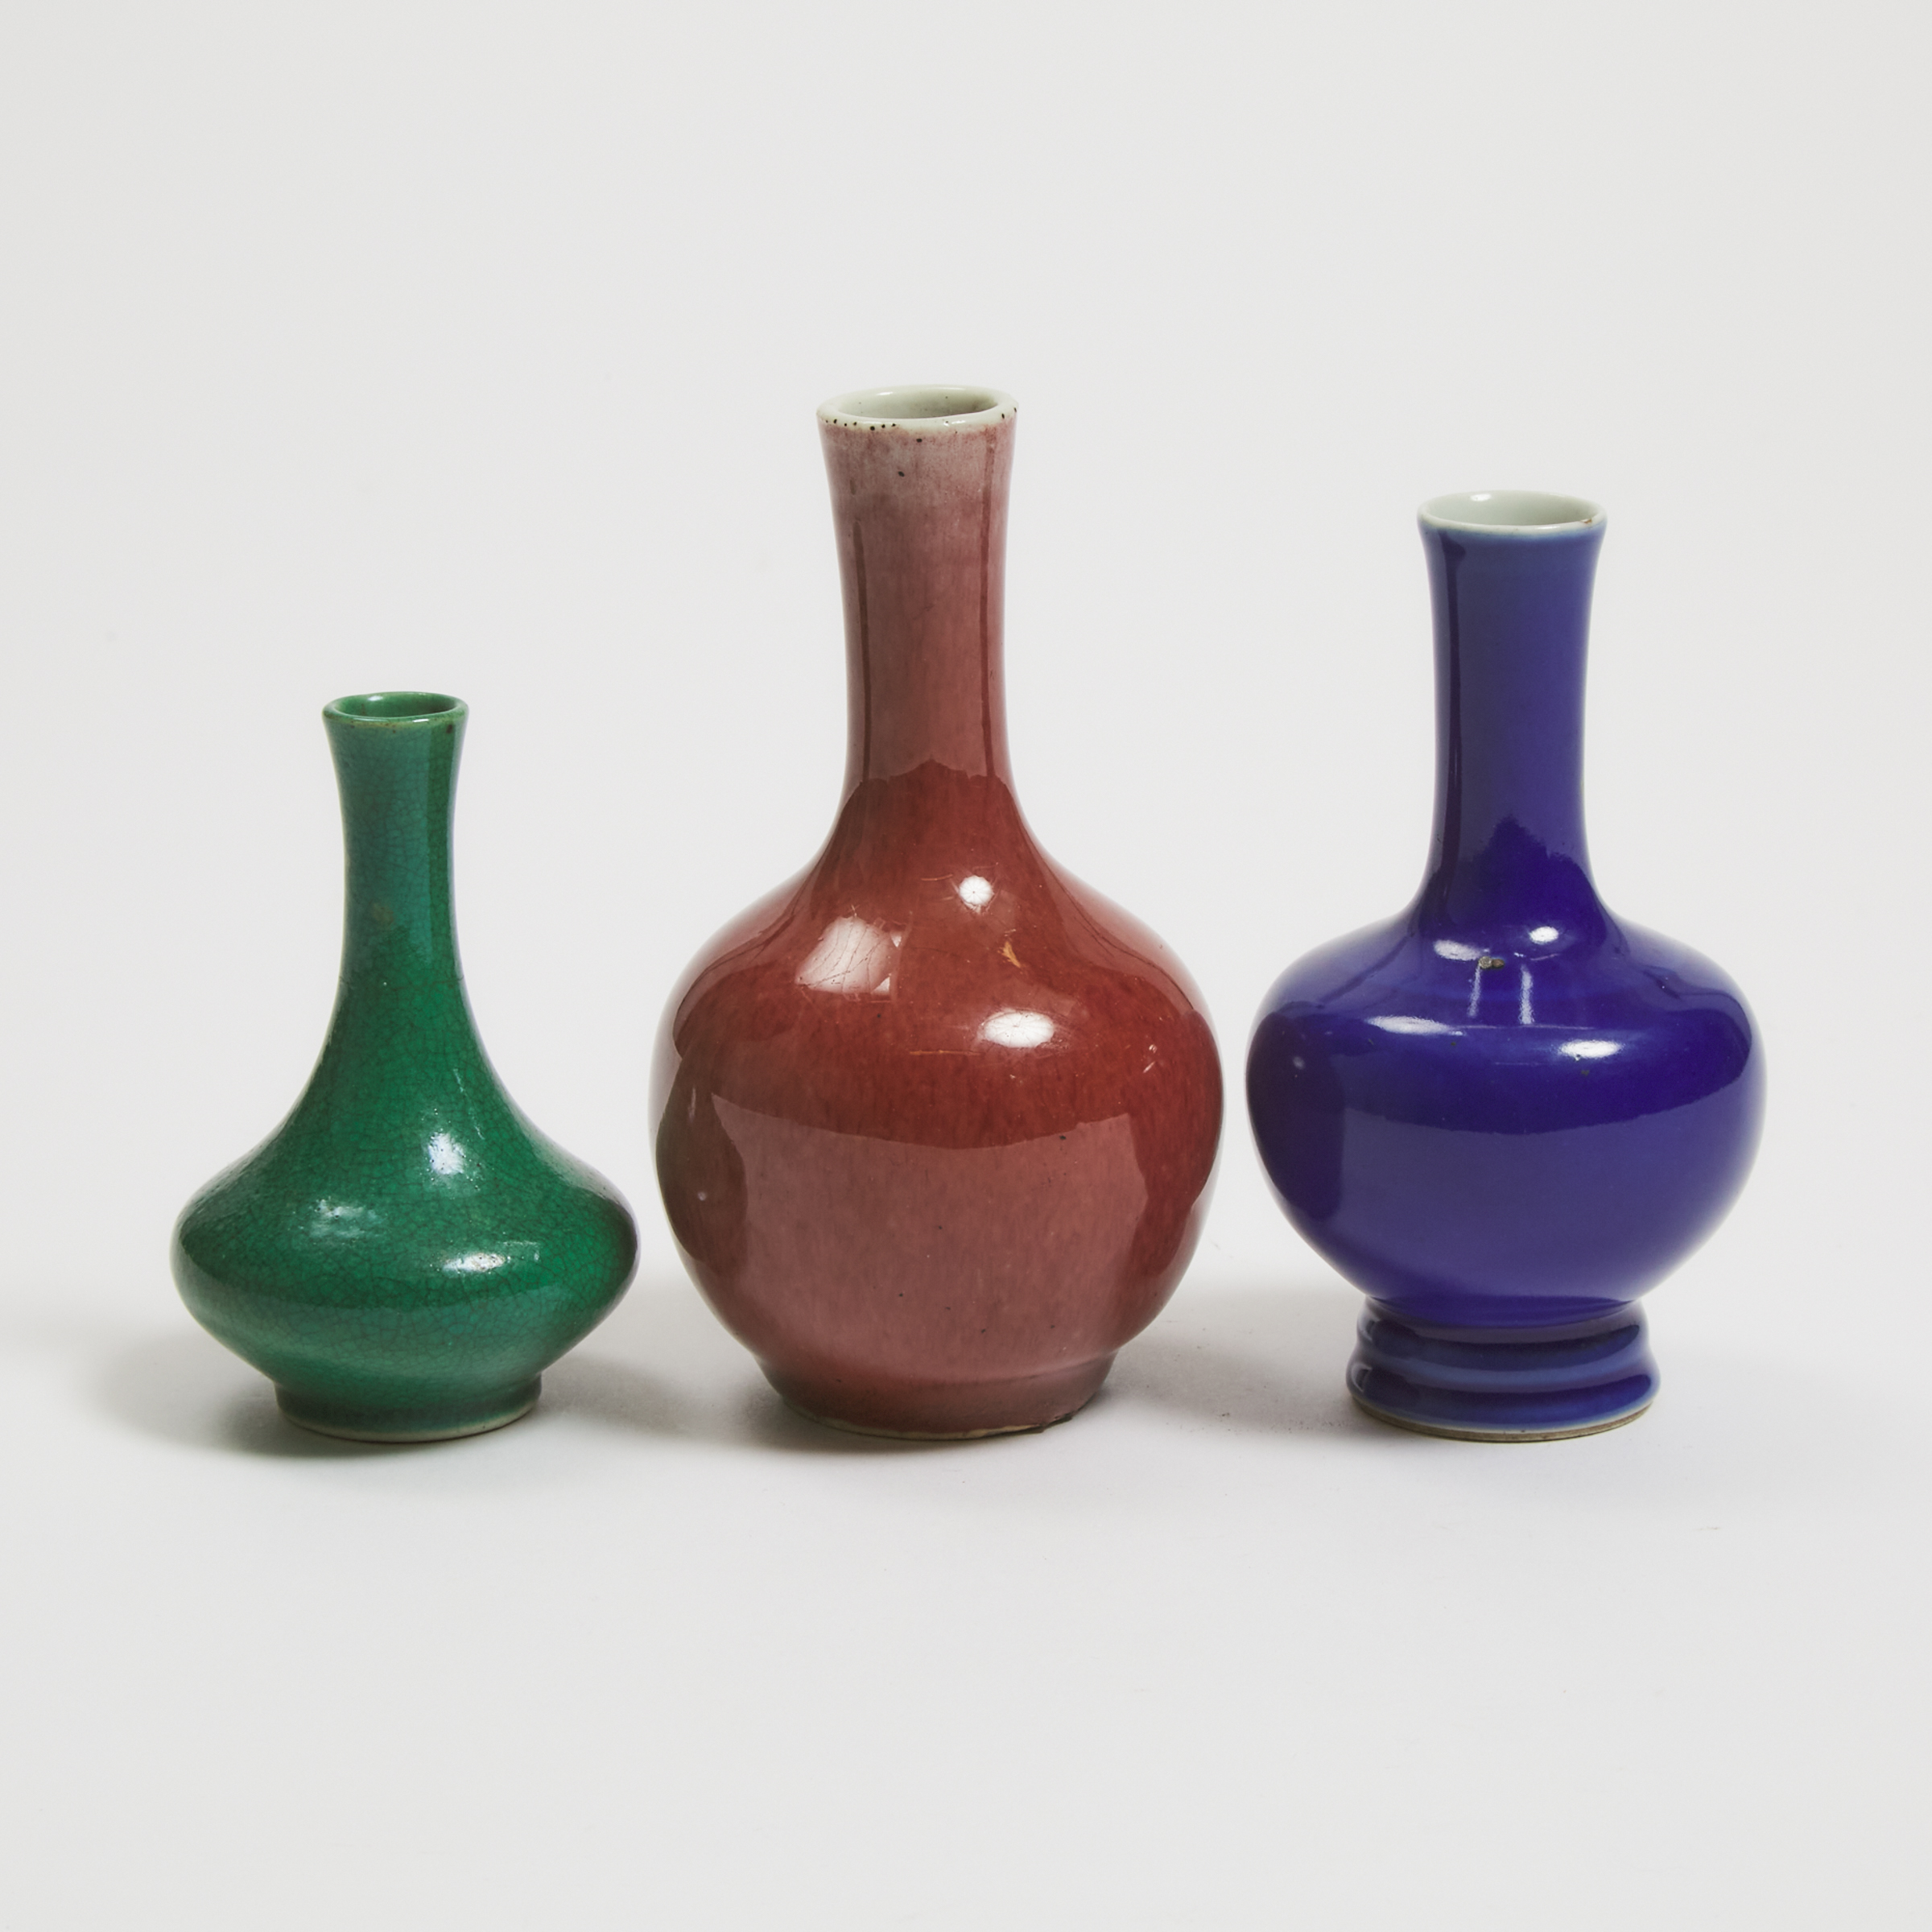 A Group of Three Miniature Monochrome-Glazed Vases, 18th/19th Century